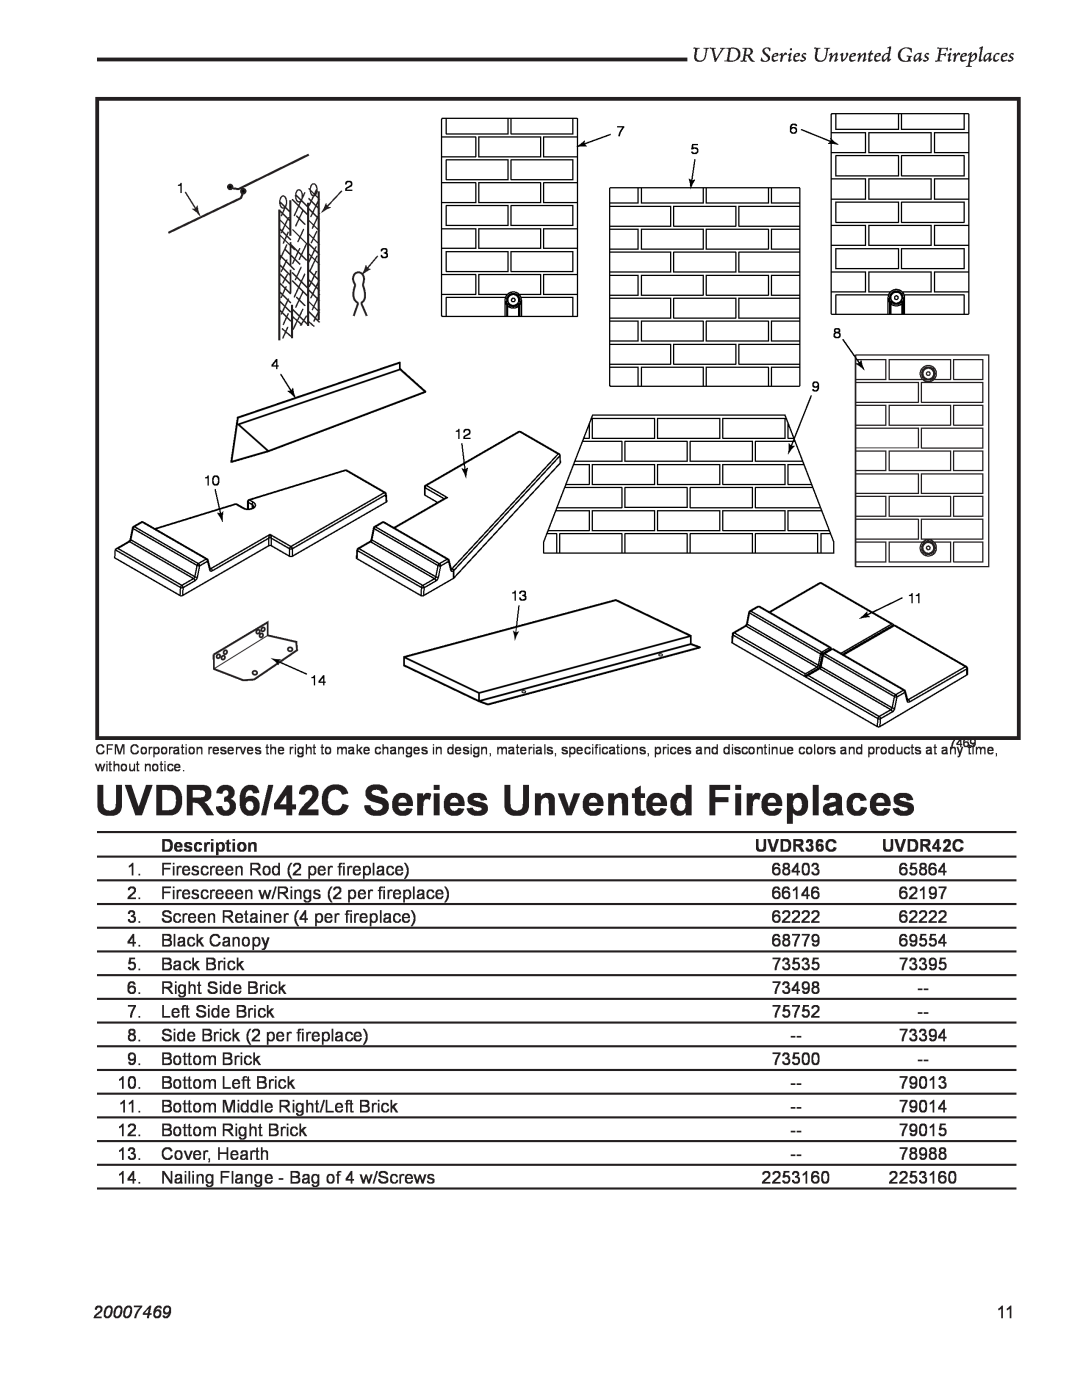 CFM Corporation UVDR36C UVDR36/42C Series Unvented Fireplaces, Description, UVDR Series Unvented Gas Fireplaces, UVDR42C 